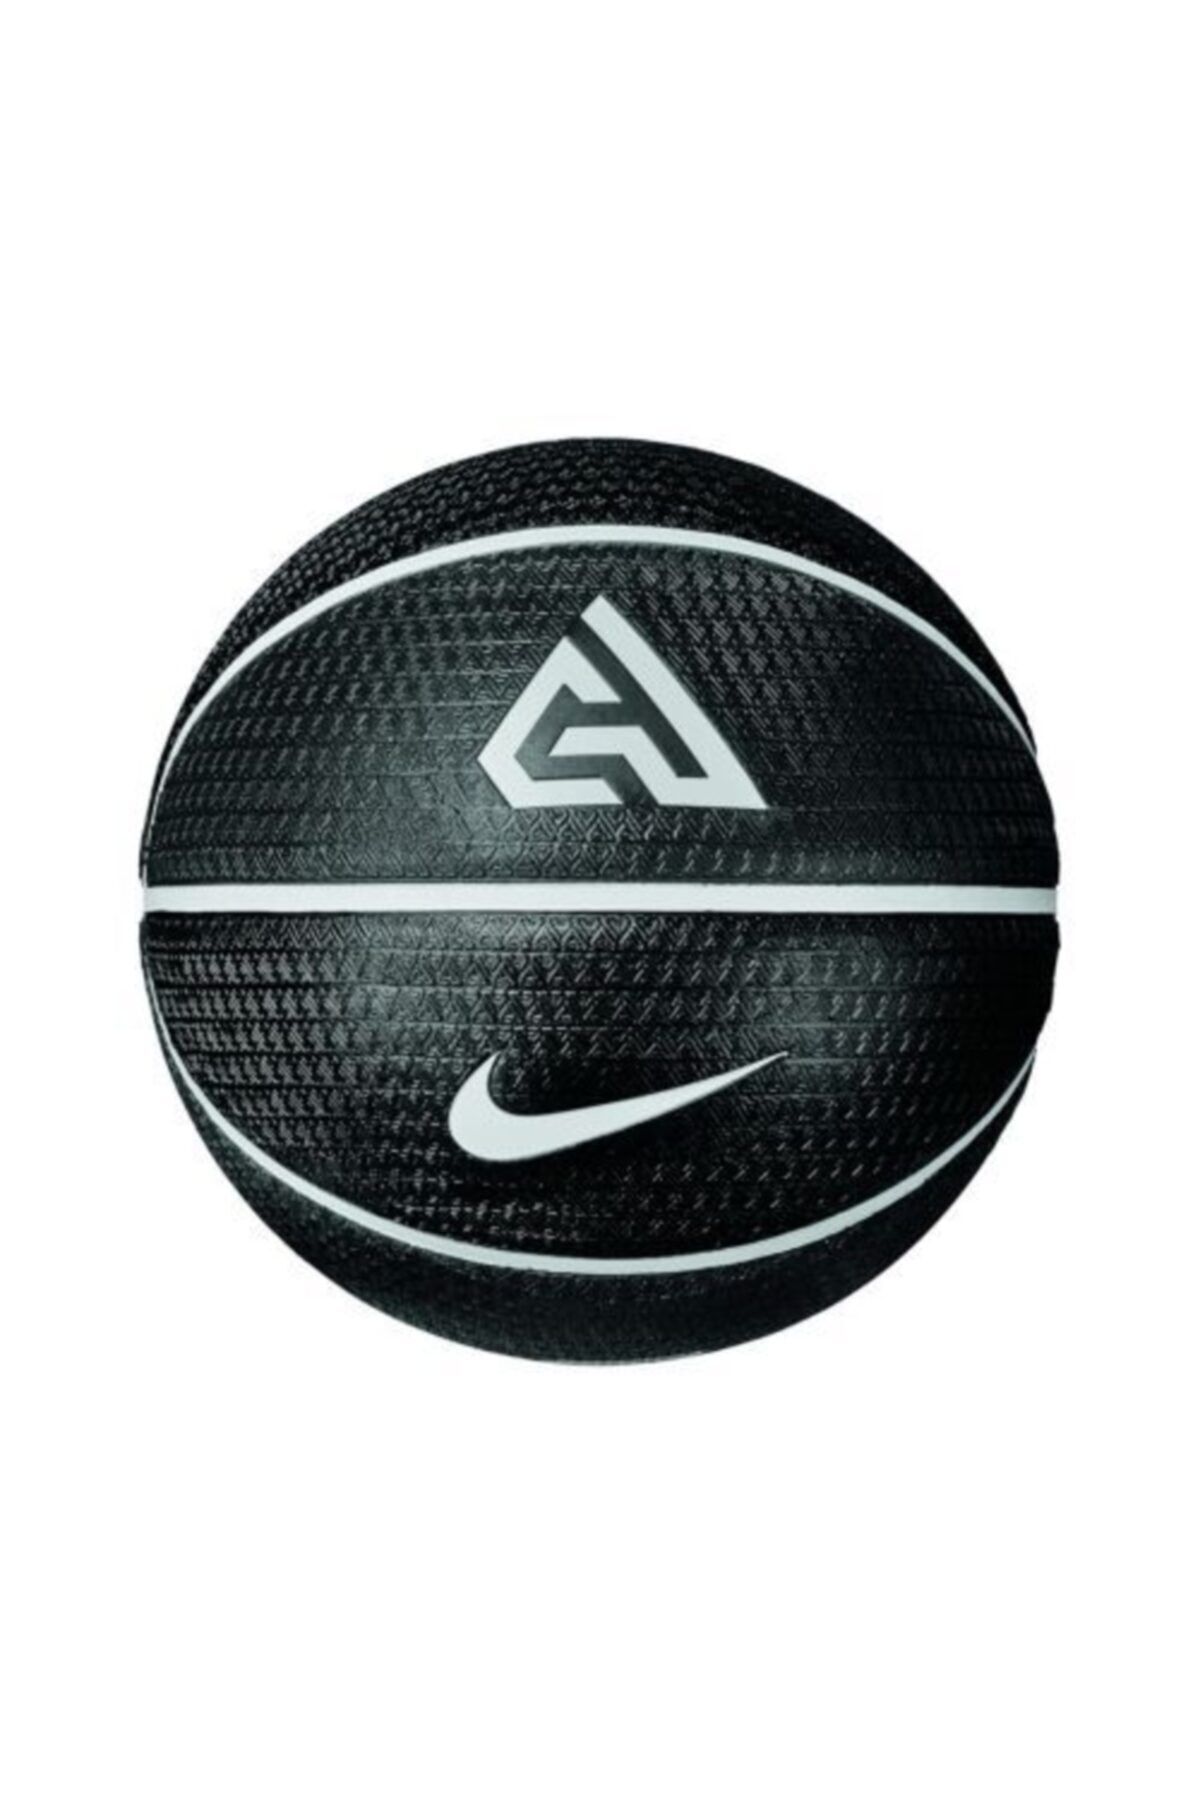 Nike Nıke Playground 8p 2.0 G Antetokounmpo Deflated Anthracıte/w